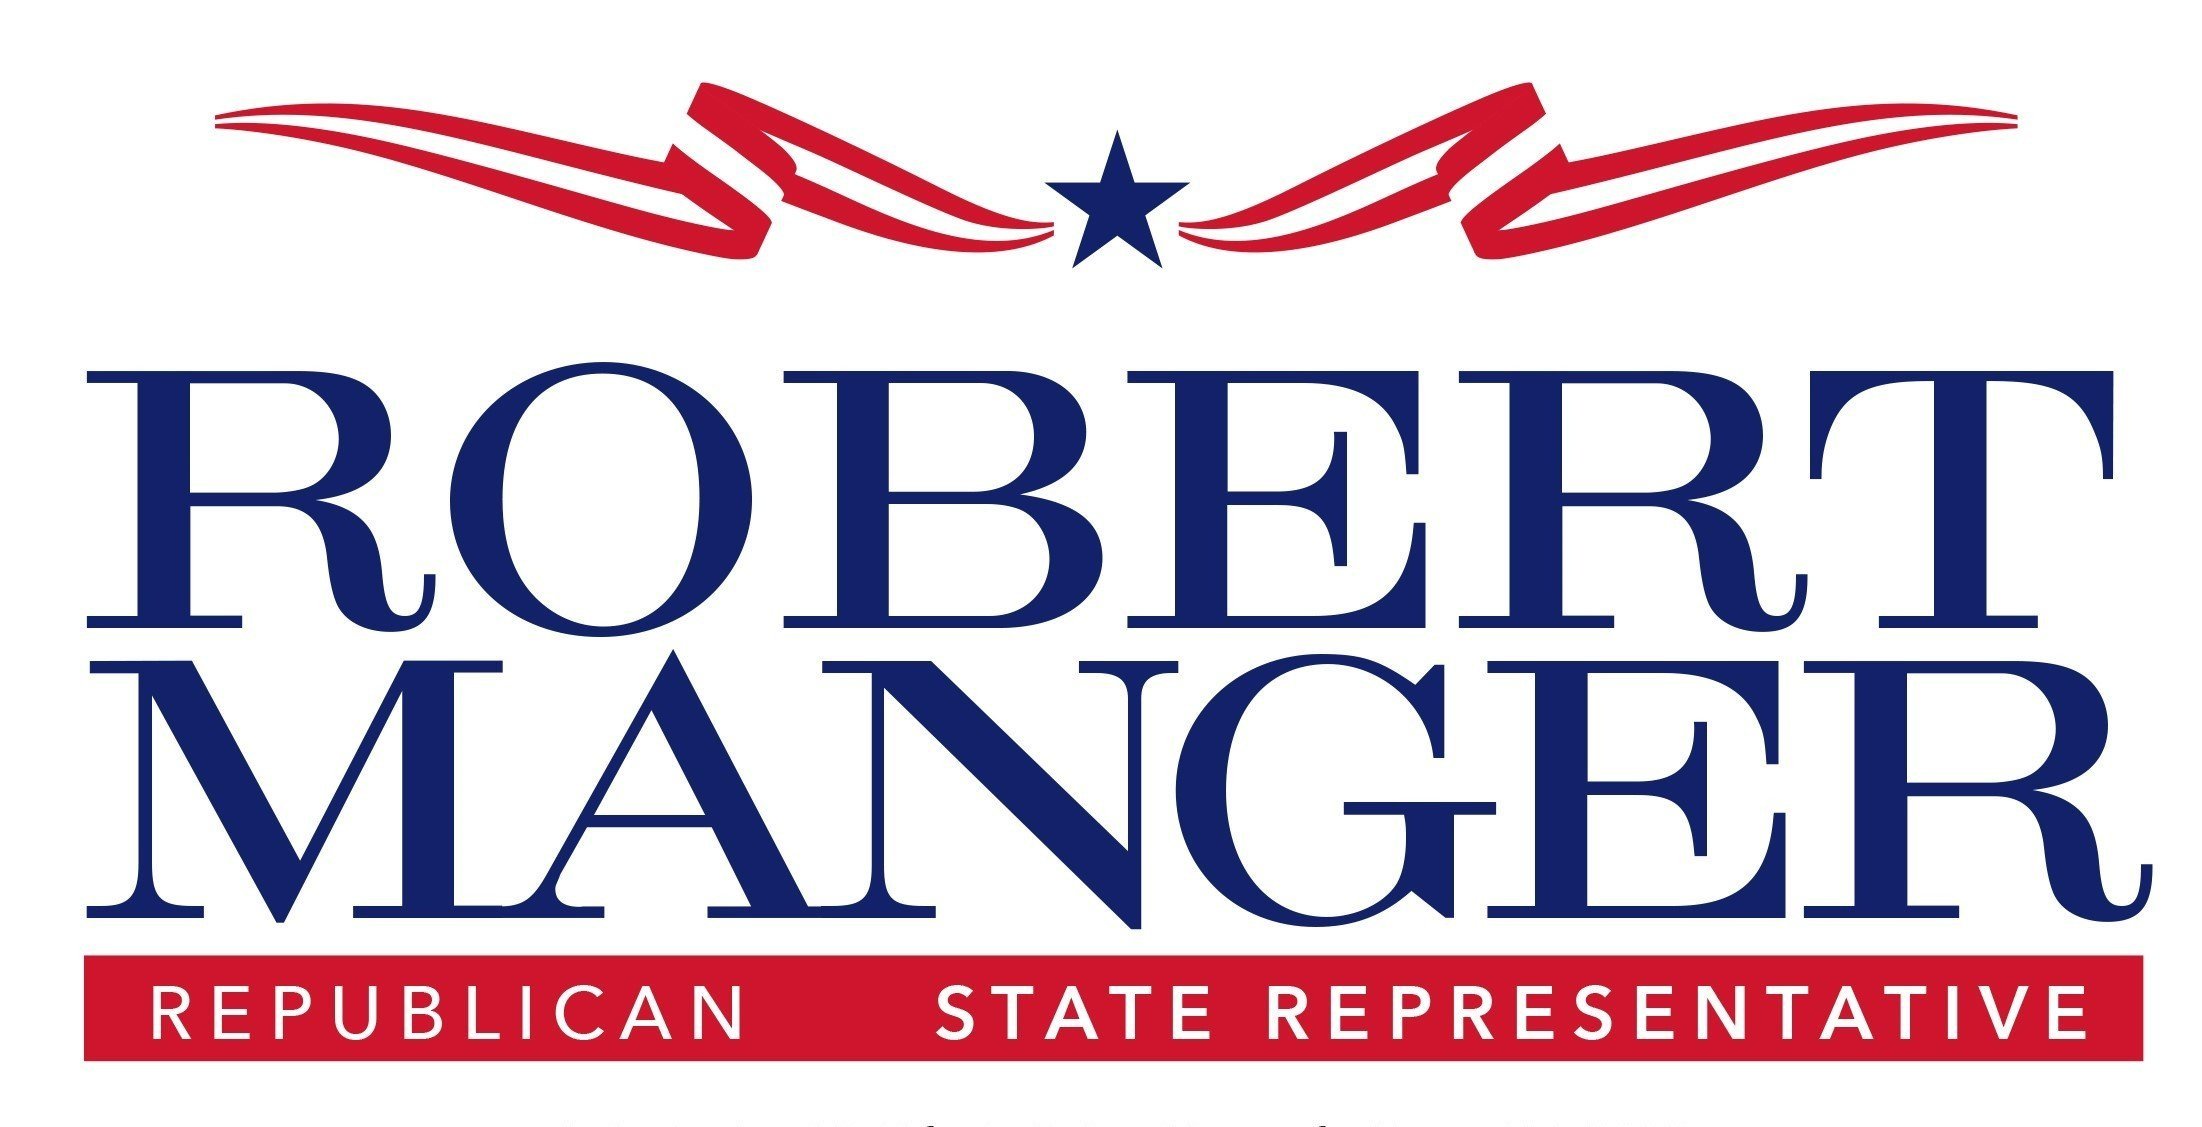 State Representative Robert Manger